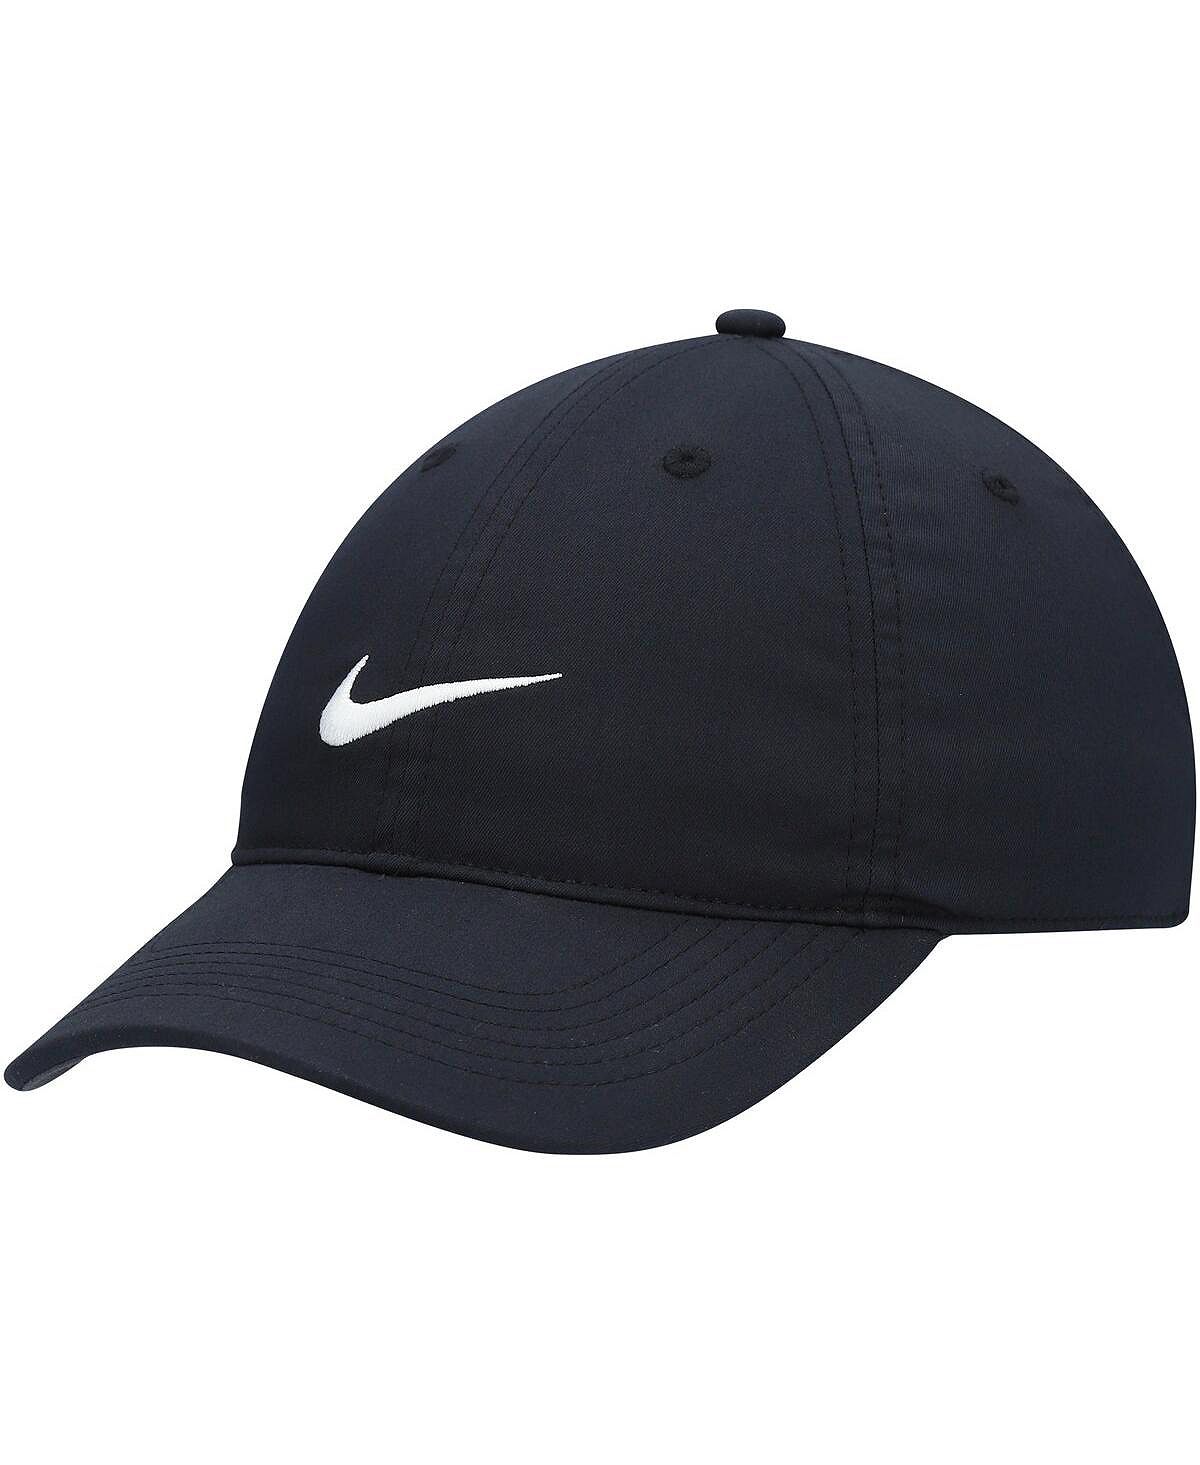 Мужская черная регулируемая шляпа Heritage86 Performance Nike